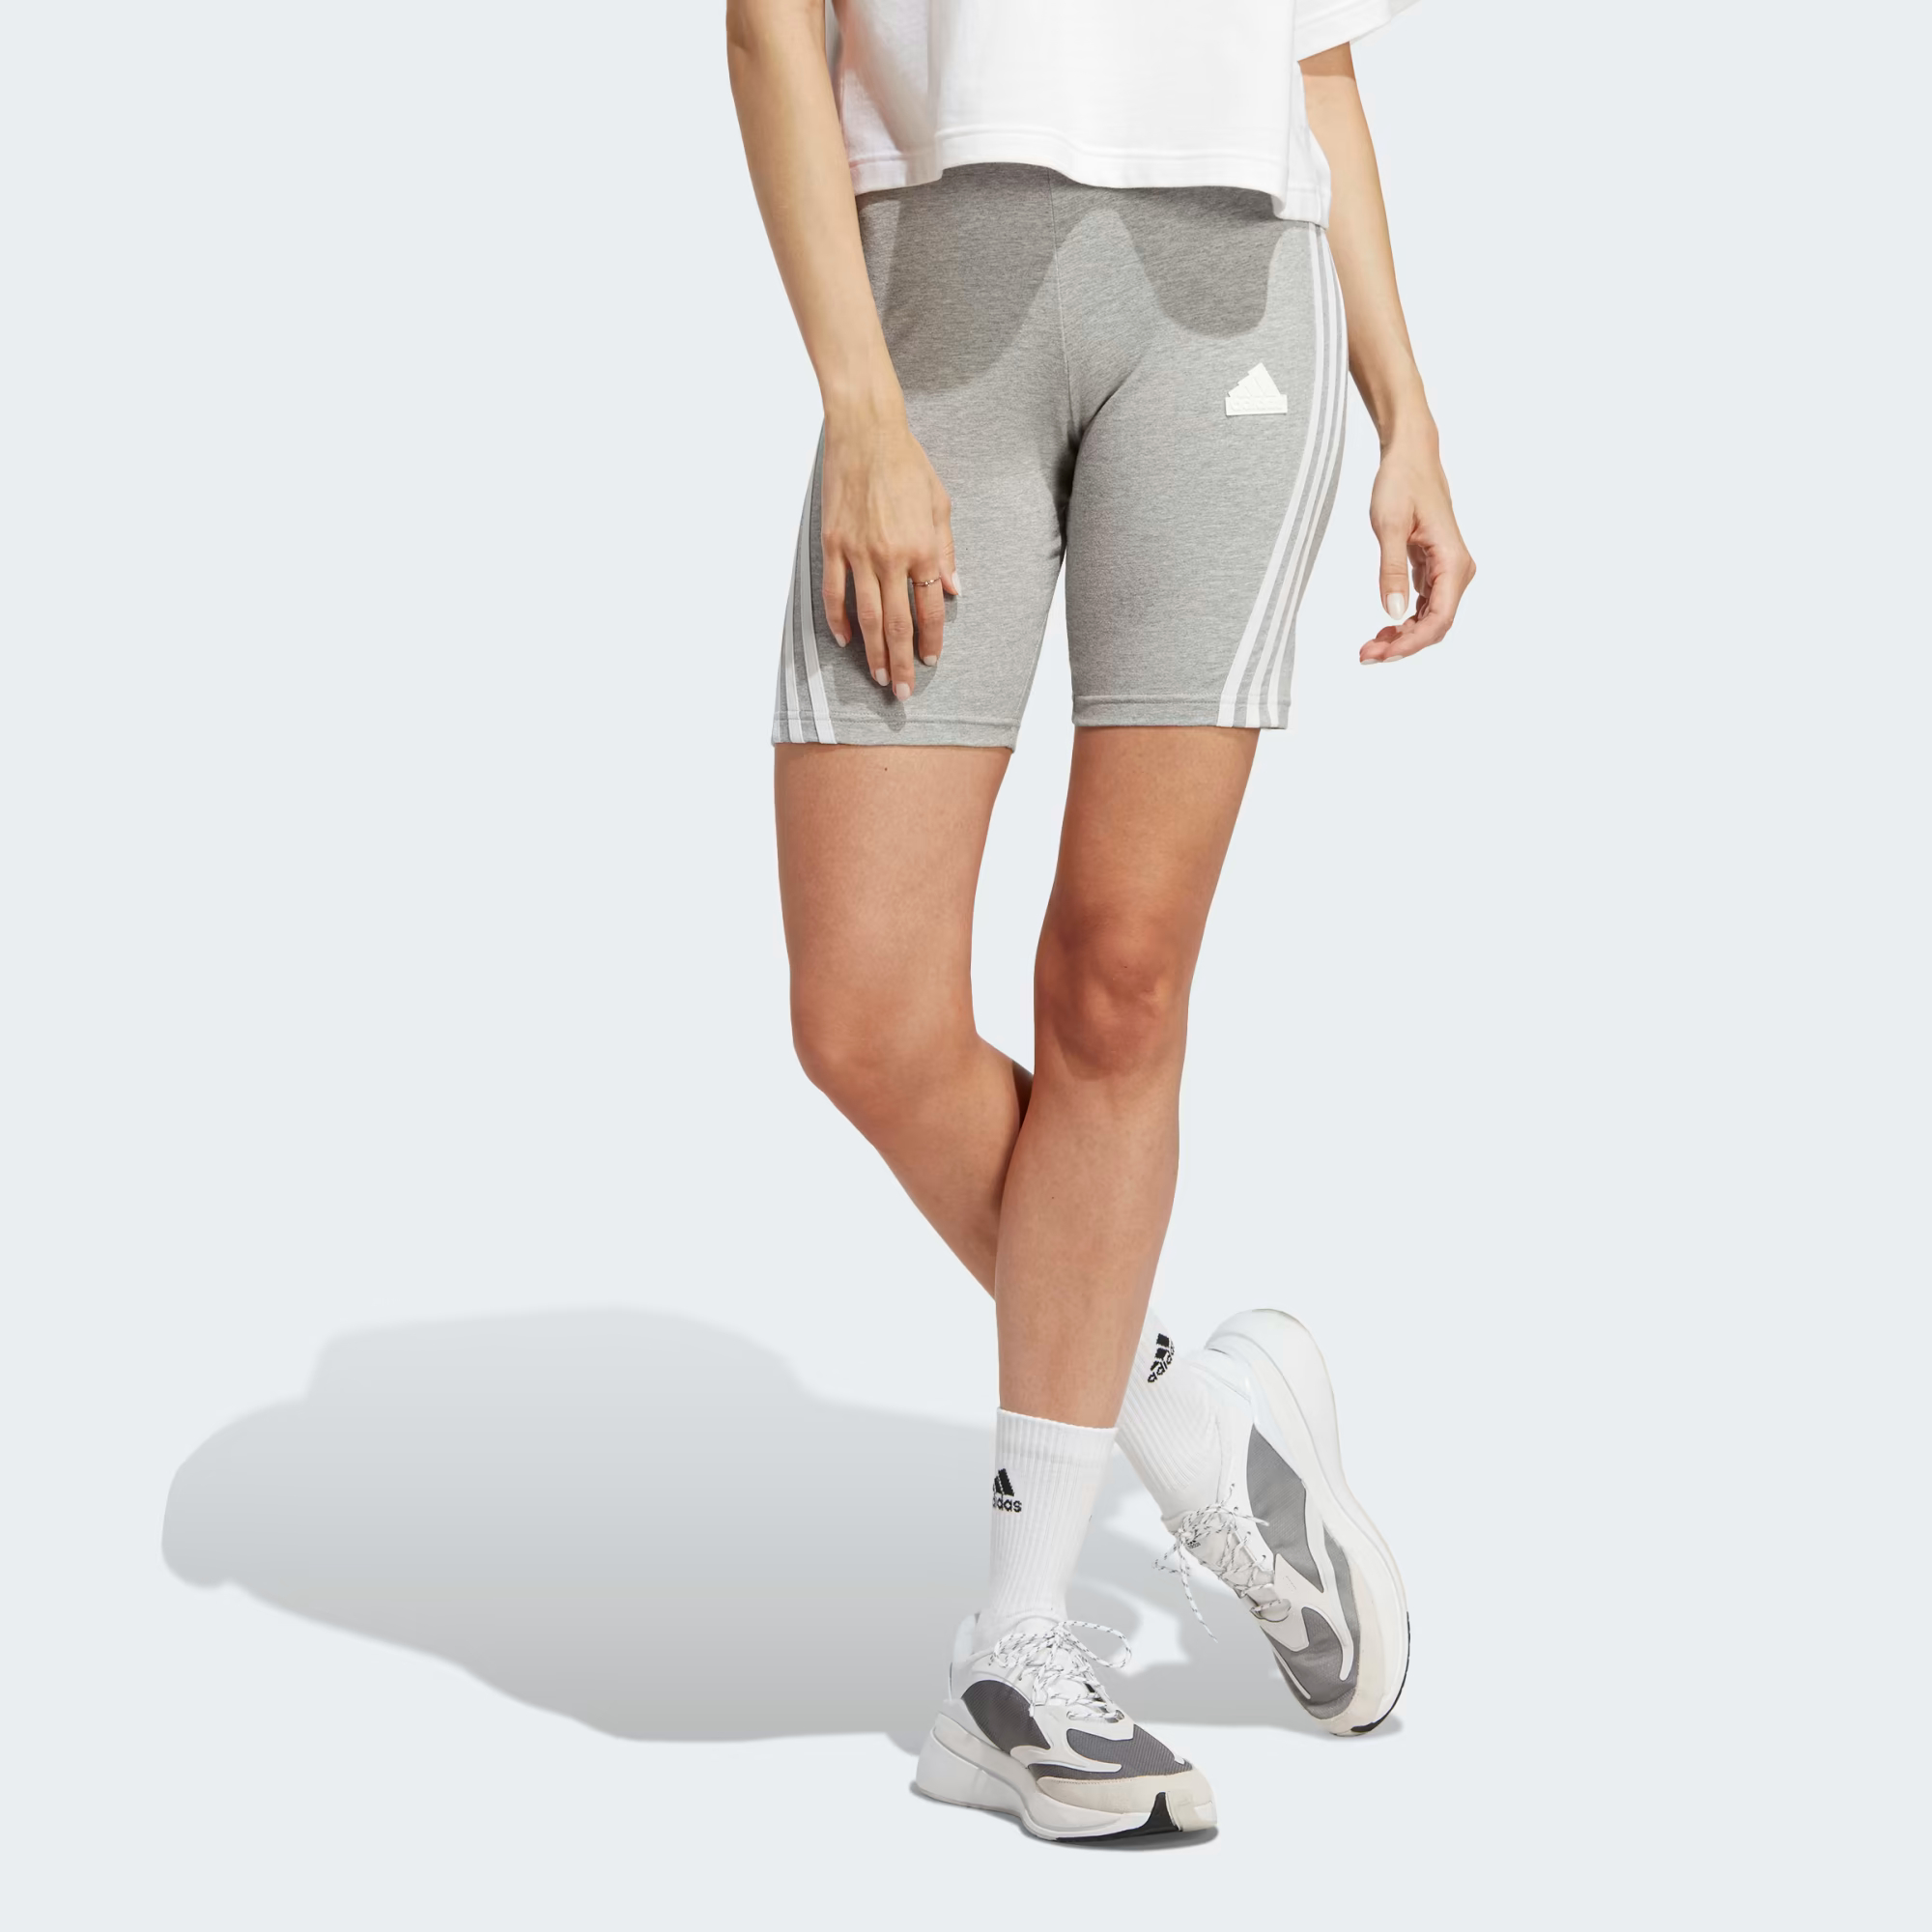  adidas Women's Techfit Primeknit 3 Shorts Tights, X-Small,  Medium Grey Heather : Sports & Outdoors